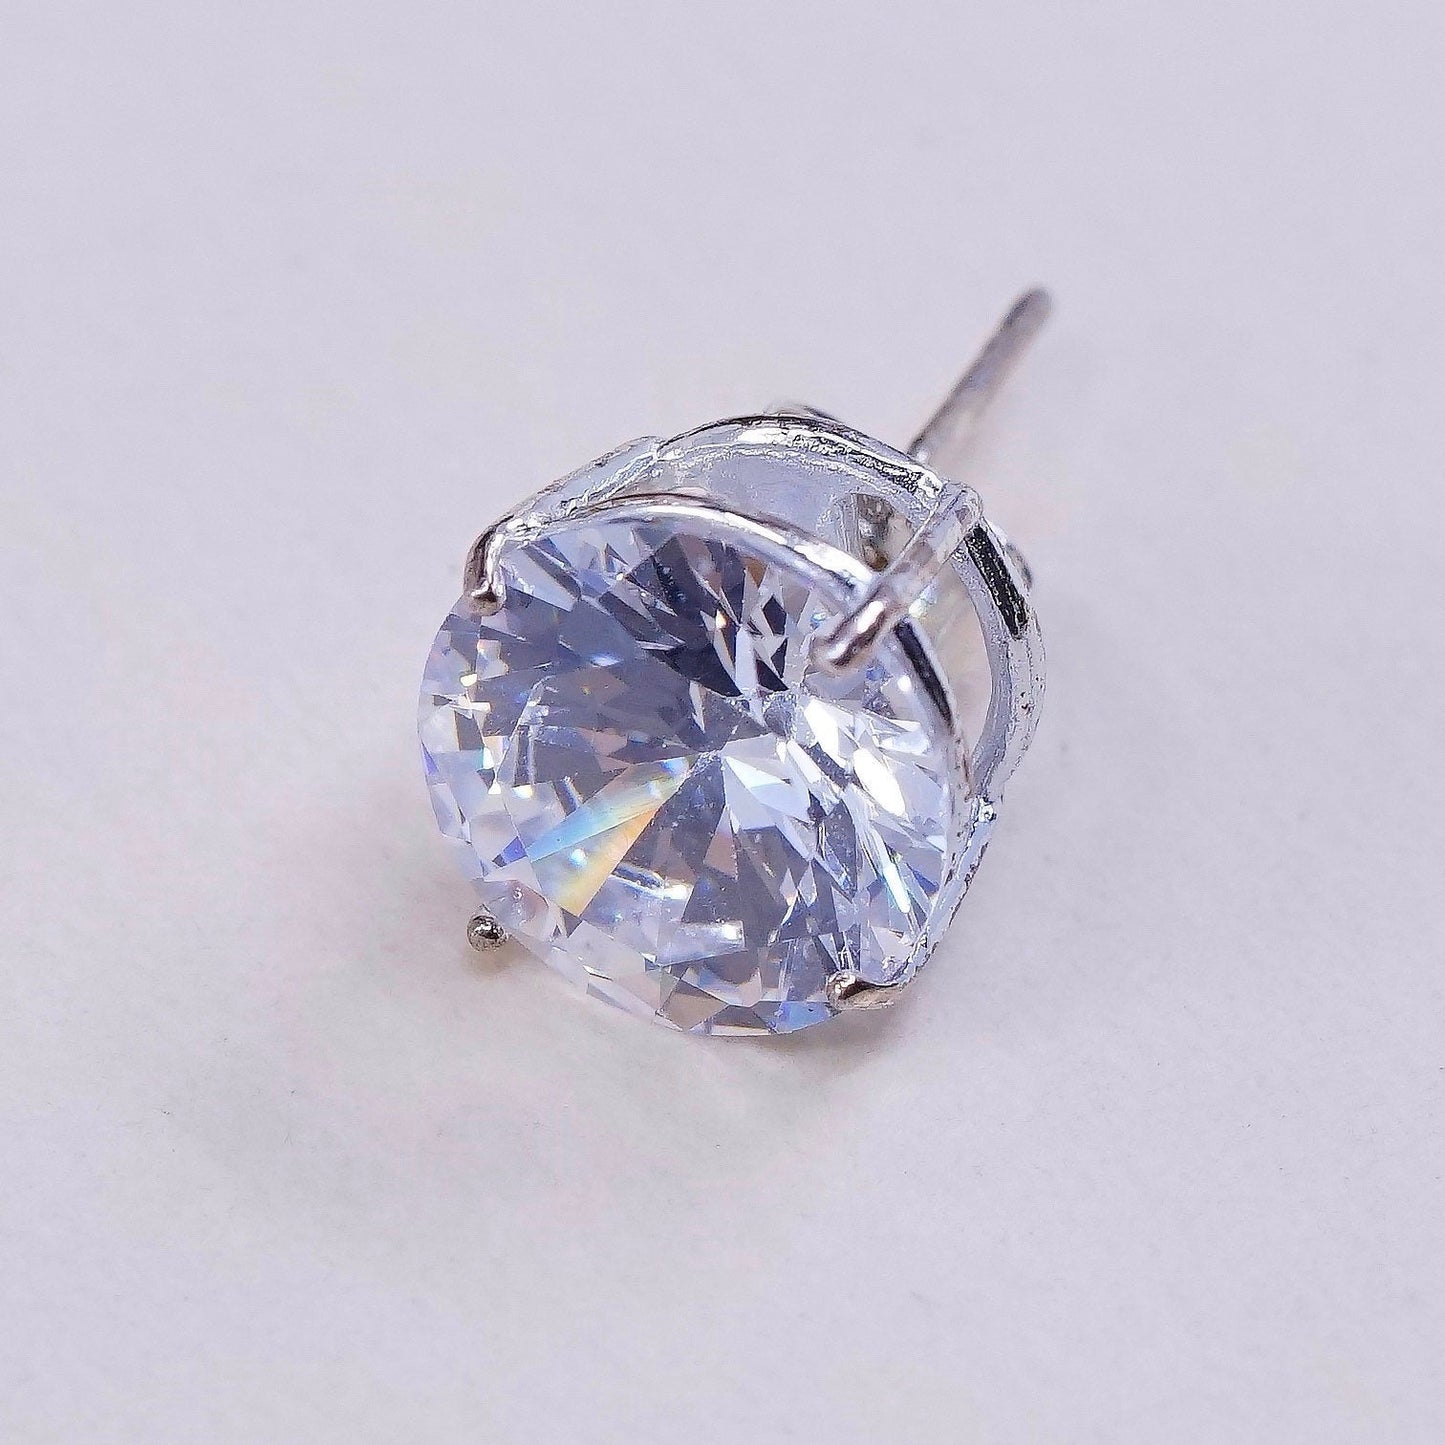 10mm, vtg sterling silver genuine cz studs, fashion minimalist earrings